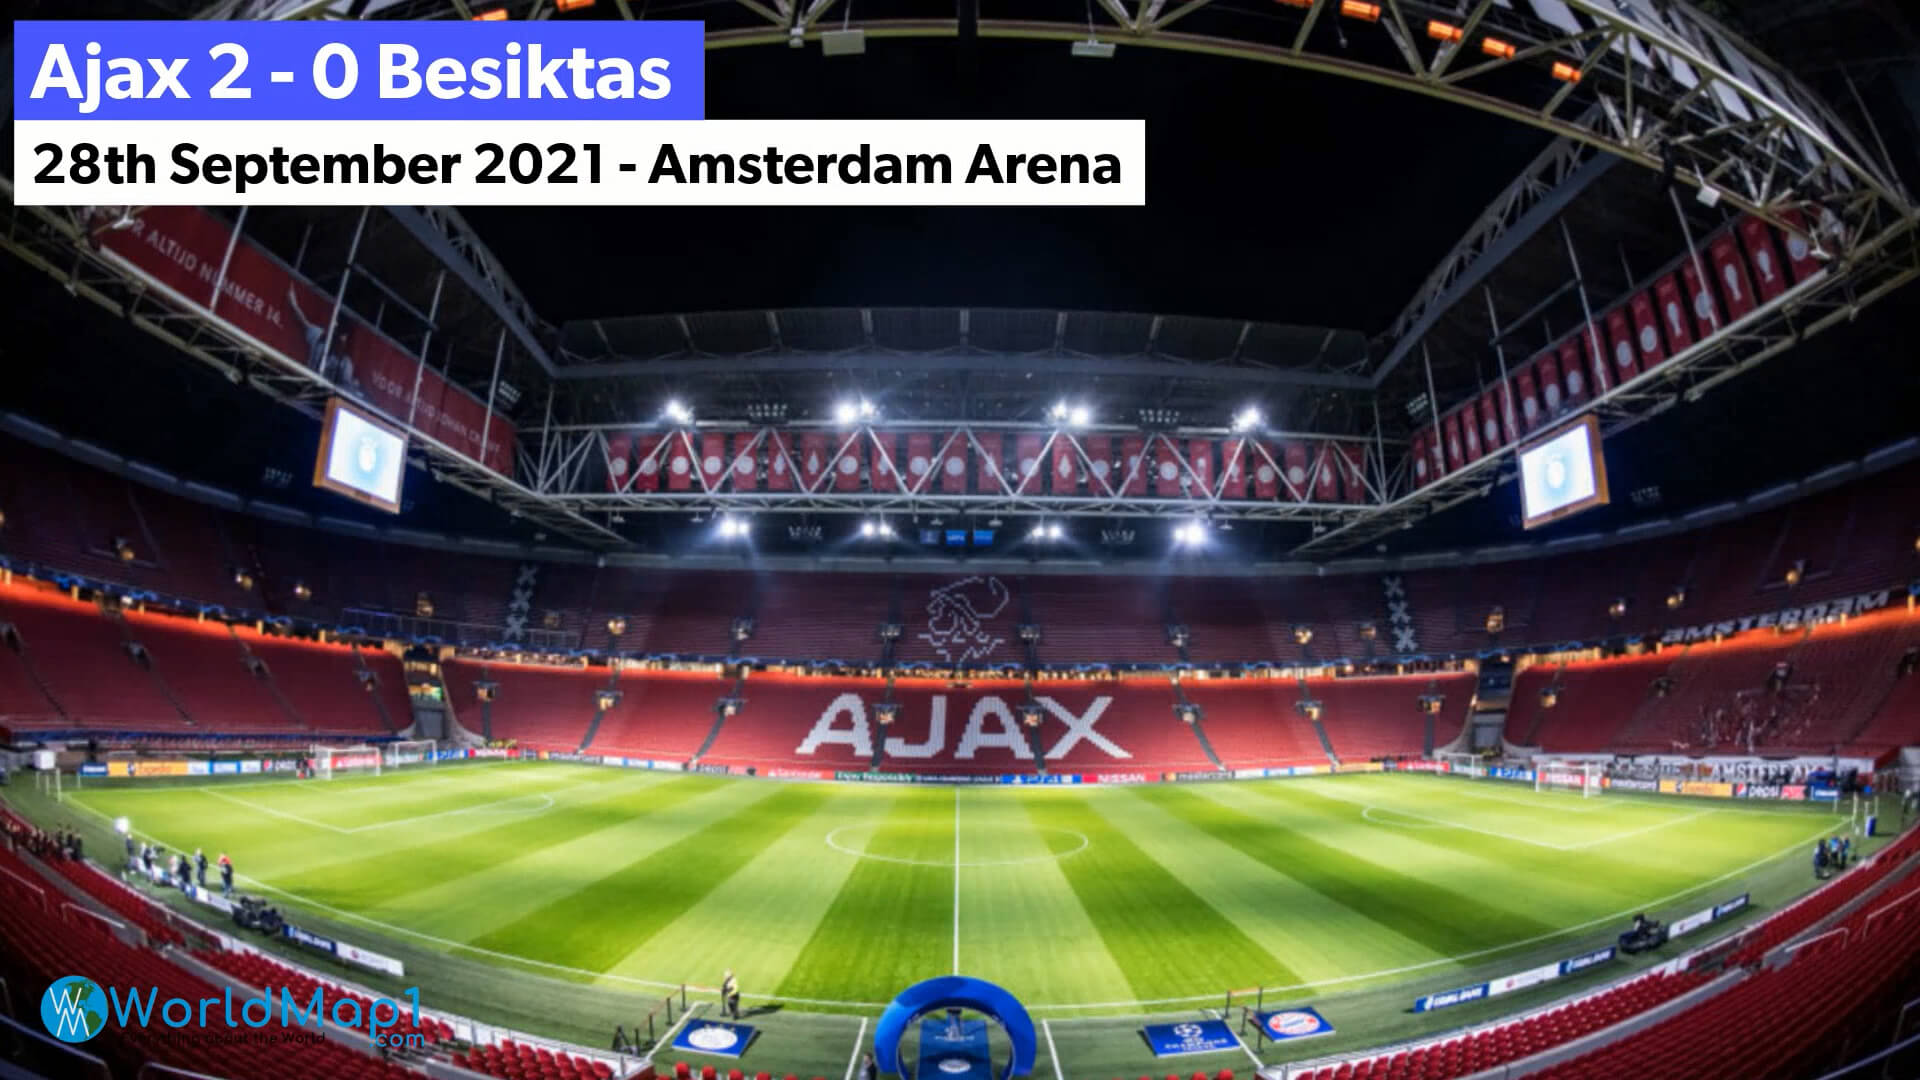 Ajax vs Besiktas Champions League First Match 2021